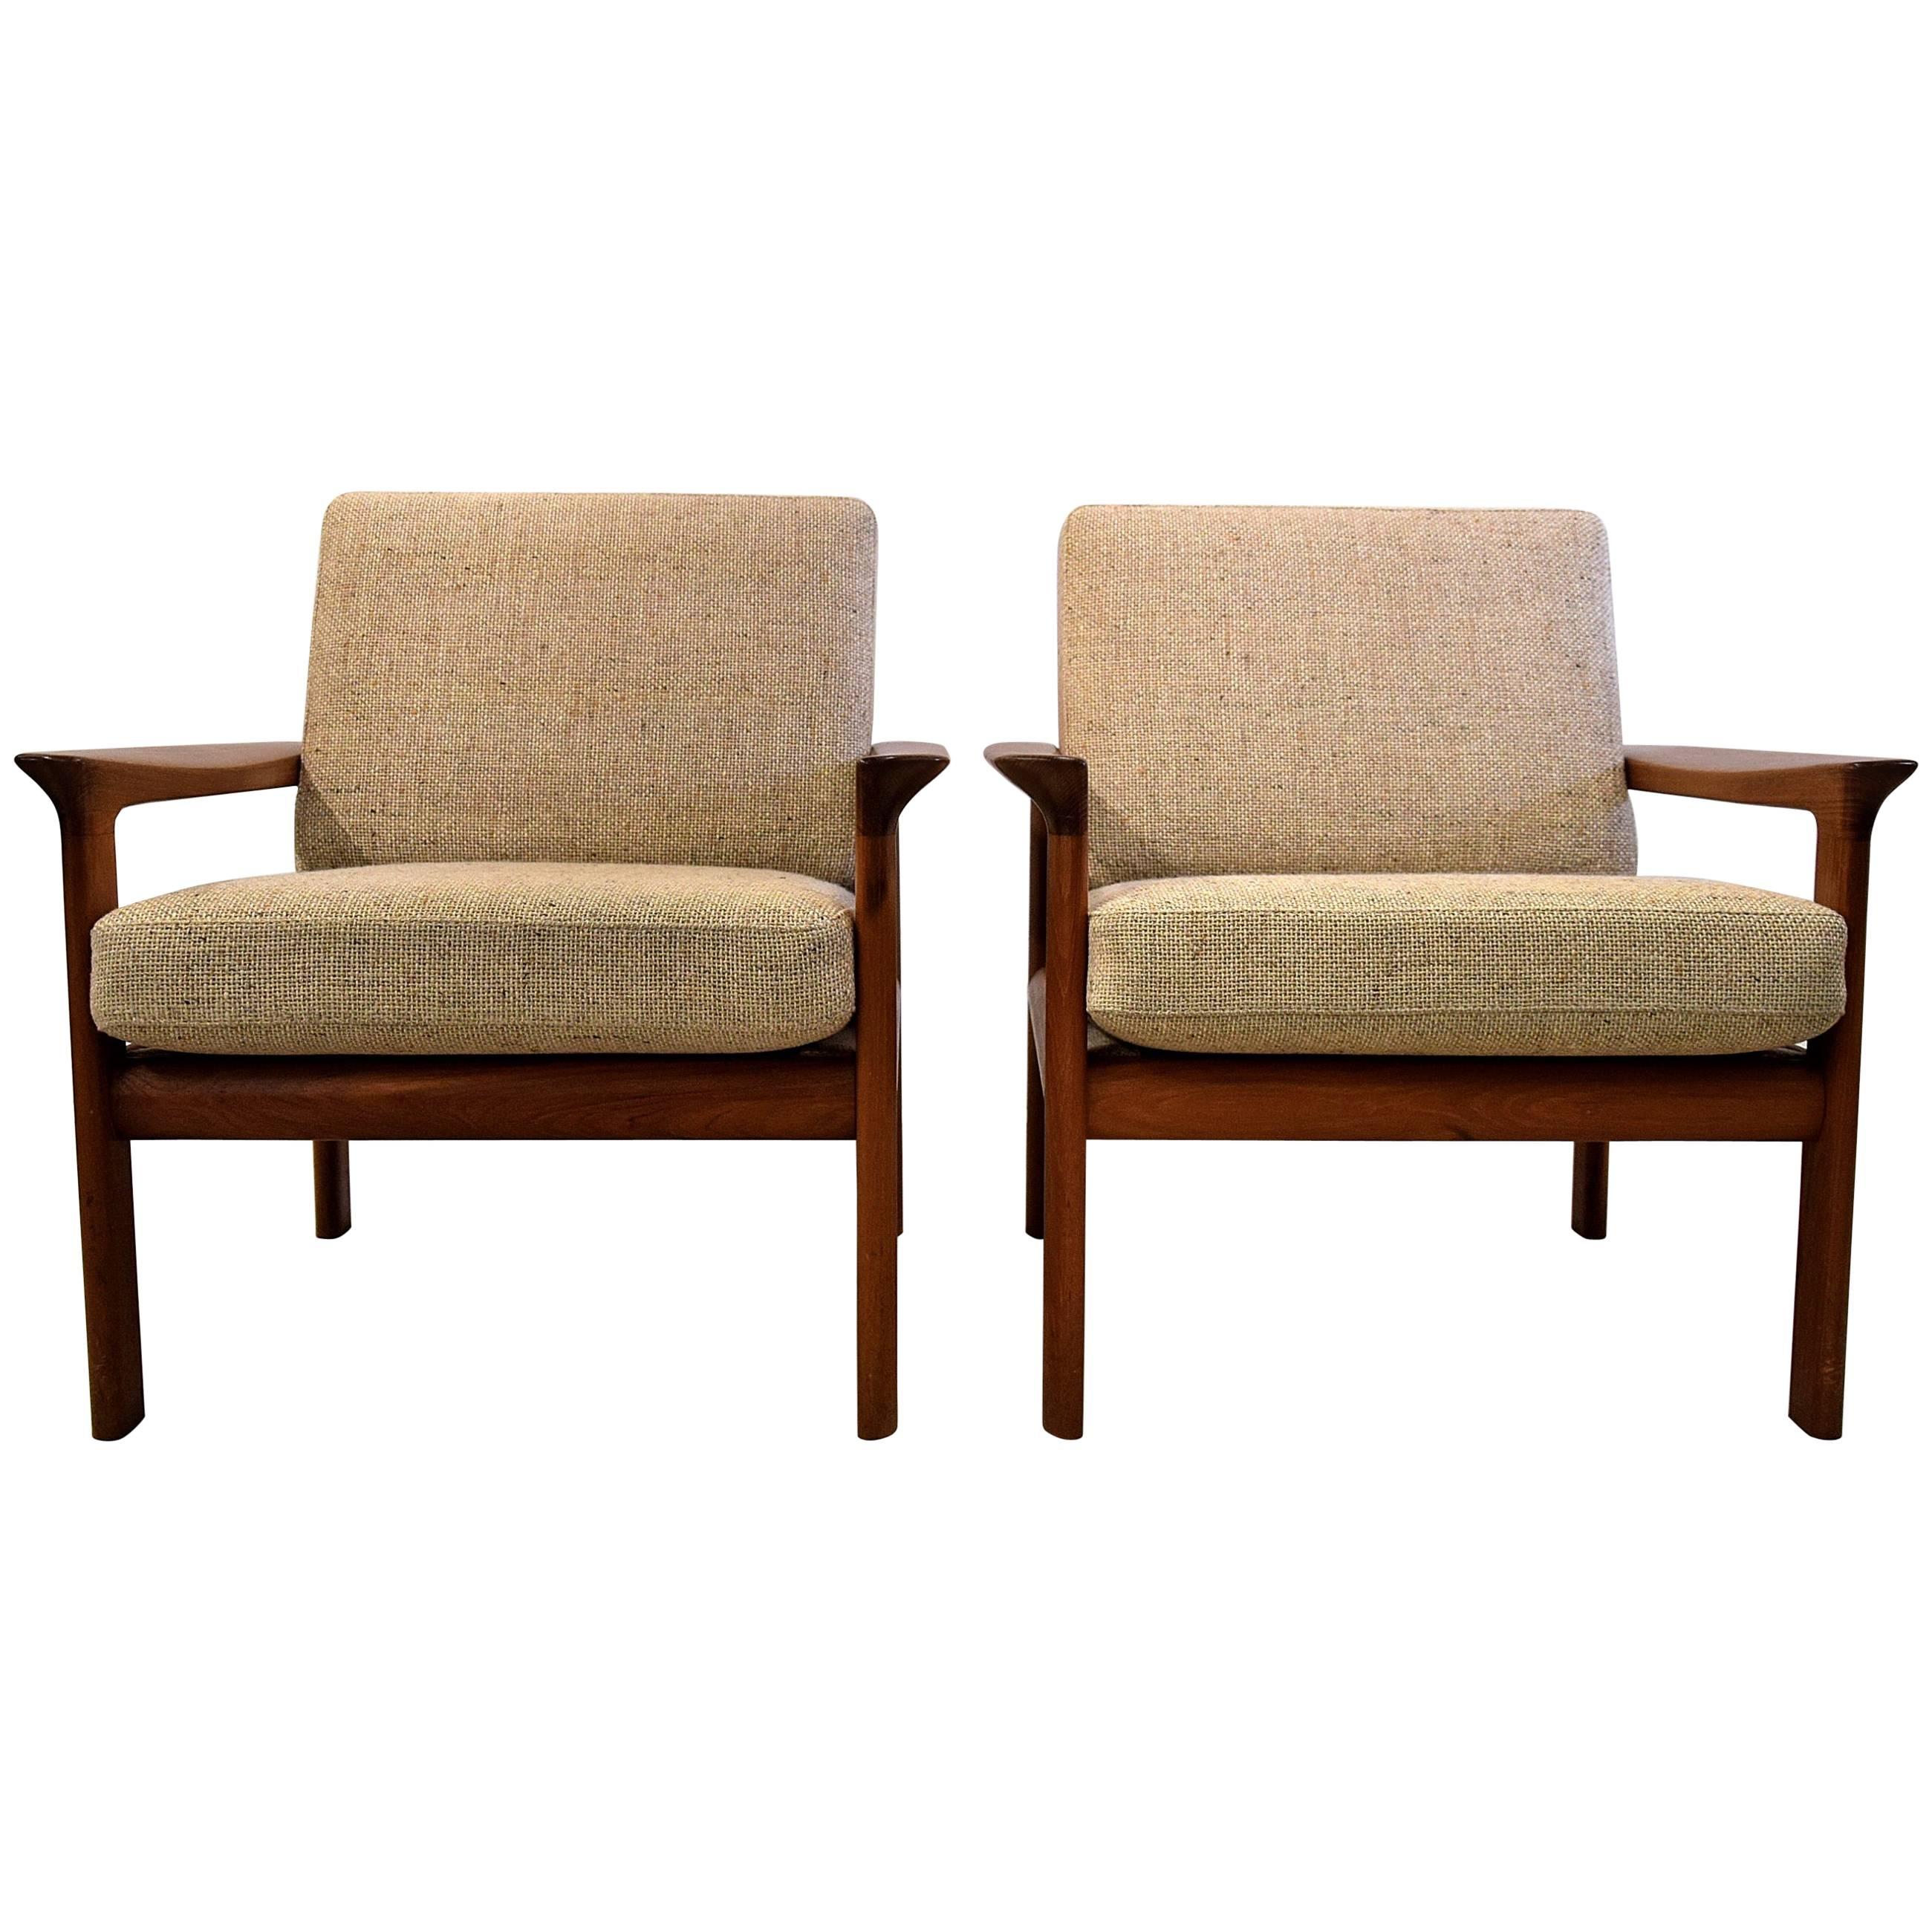 Sven Ellekaer Mid Century Modern Teak Lounge Chairs For Sale